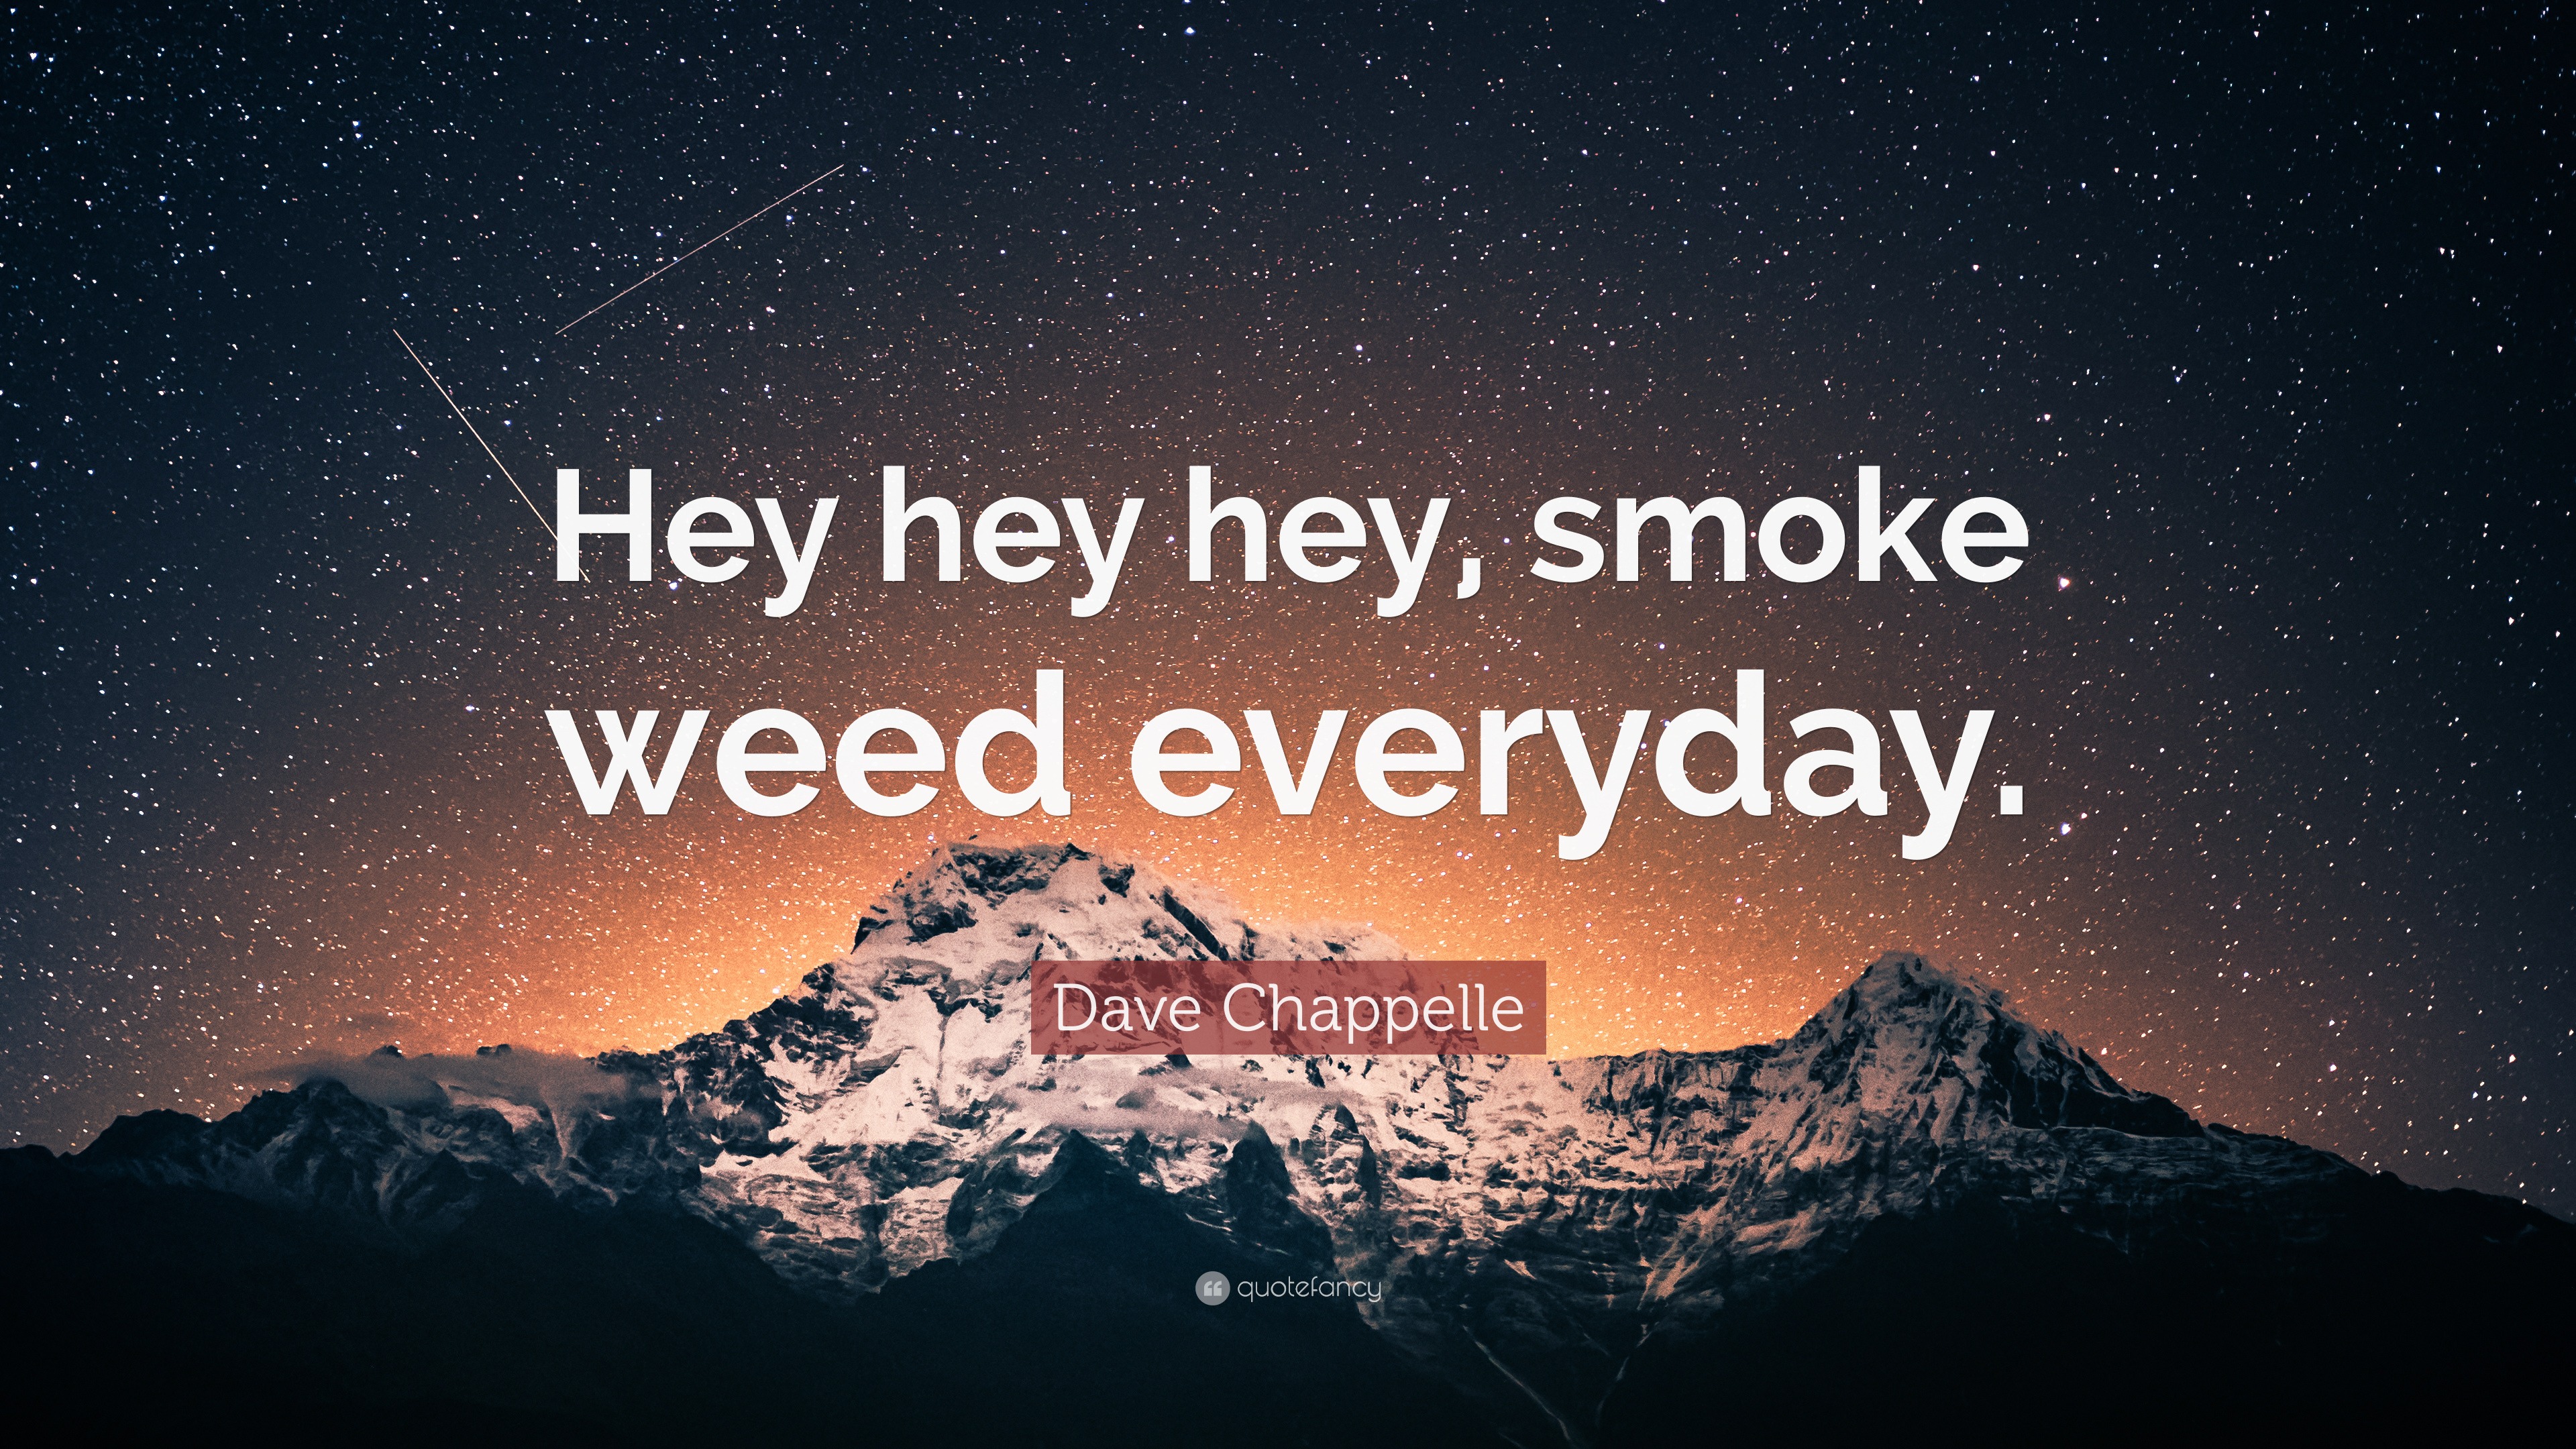 smoke weed everyday wallpaper